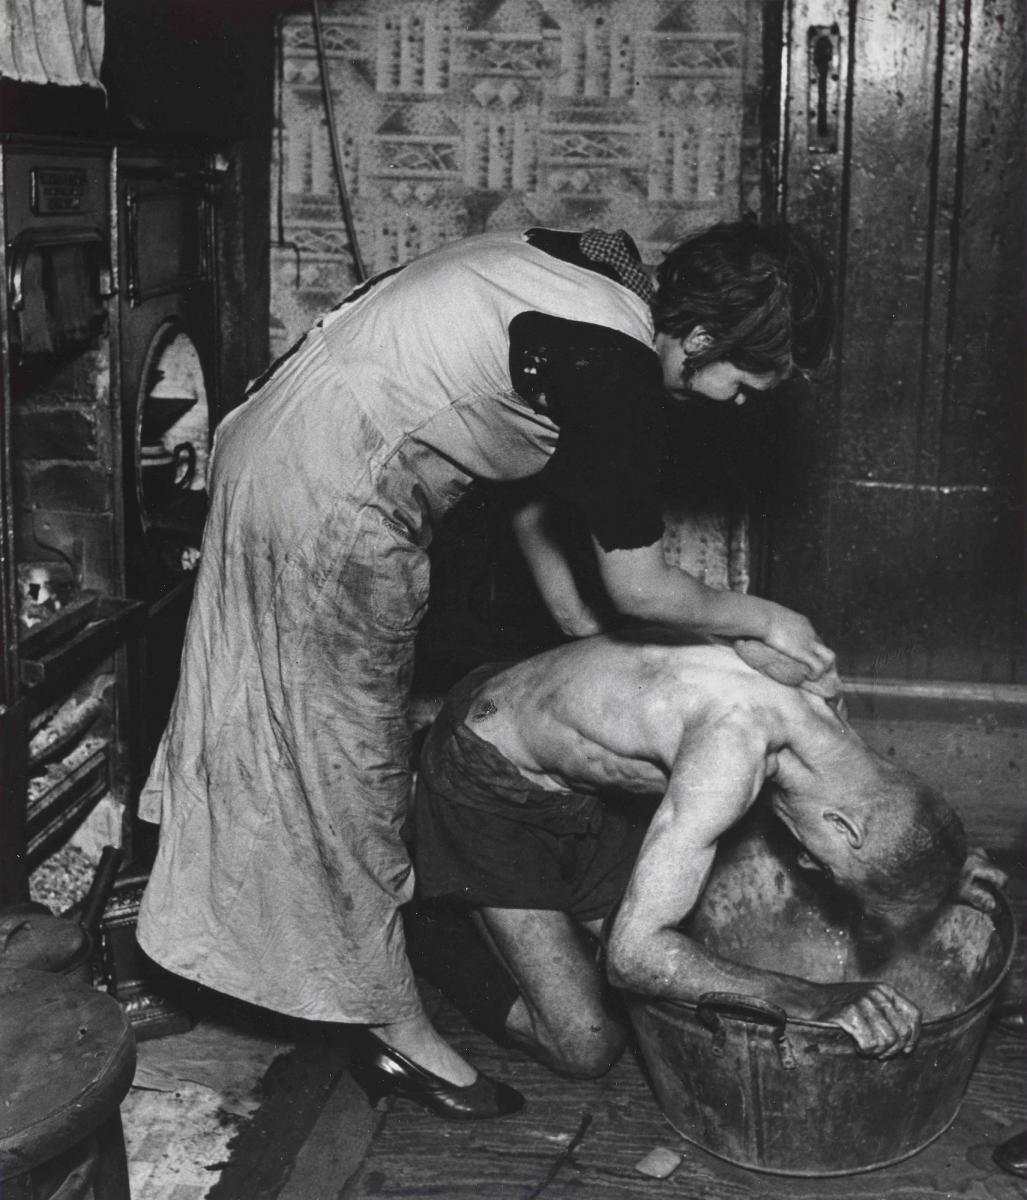 Bill Brandt, Coal-Miner’s Bath, Chester-le- Street, Durham, 1937. Gelatin silver print, Edwynn Houk Gallery, New York. © Bill Brandt / Bill Brandt Archive Ltd. Photo: Yale Center for British Art